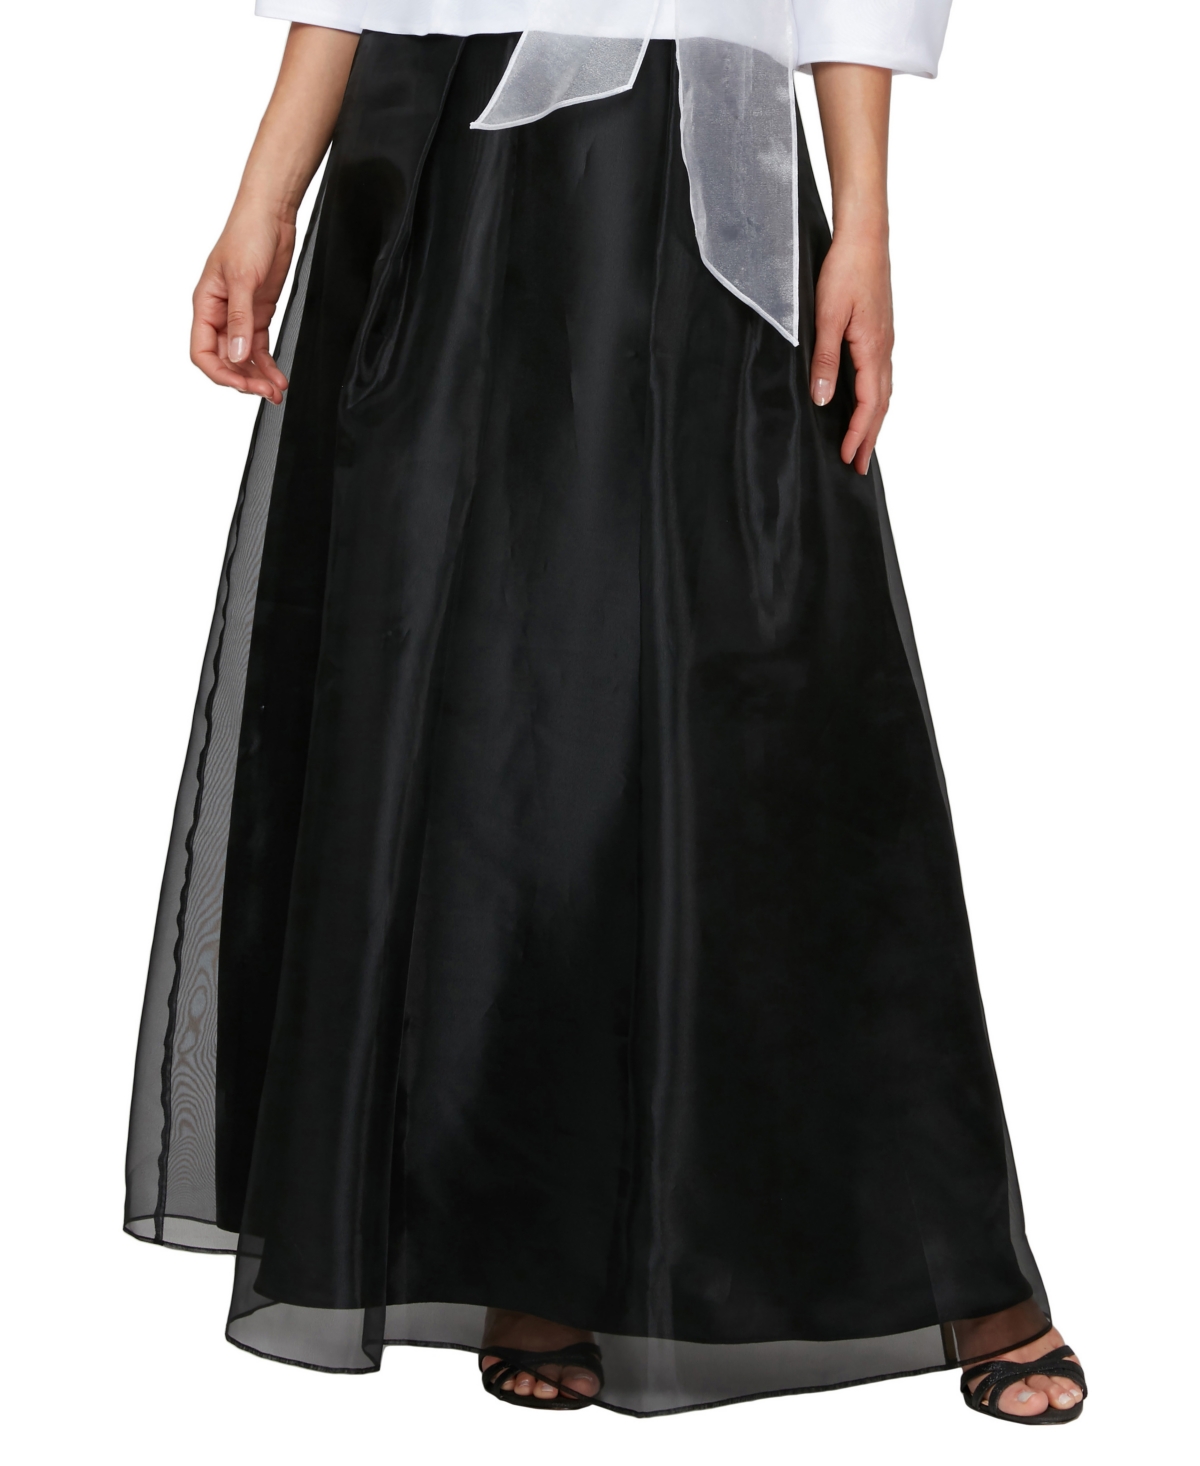 Petite Organza Full Ball Gown Skirt - Black